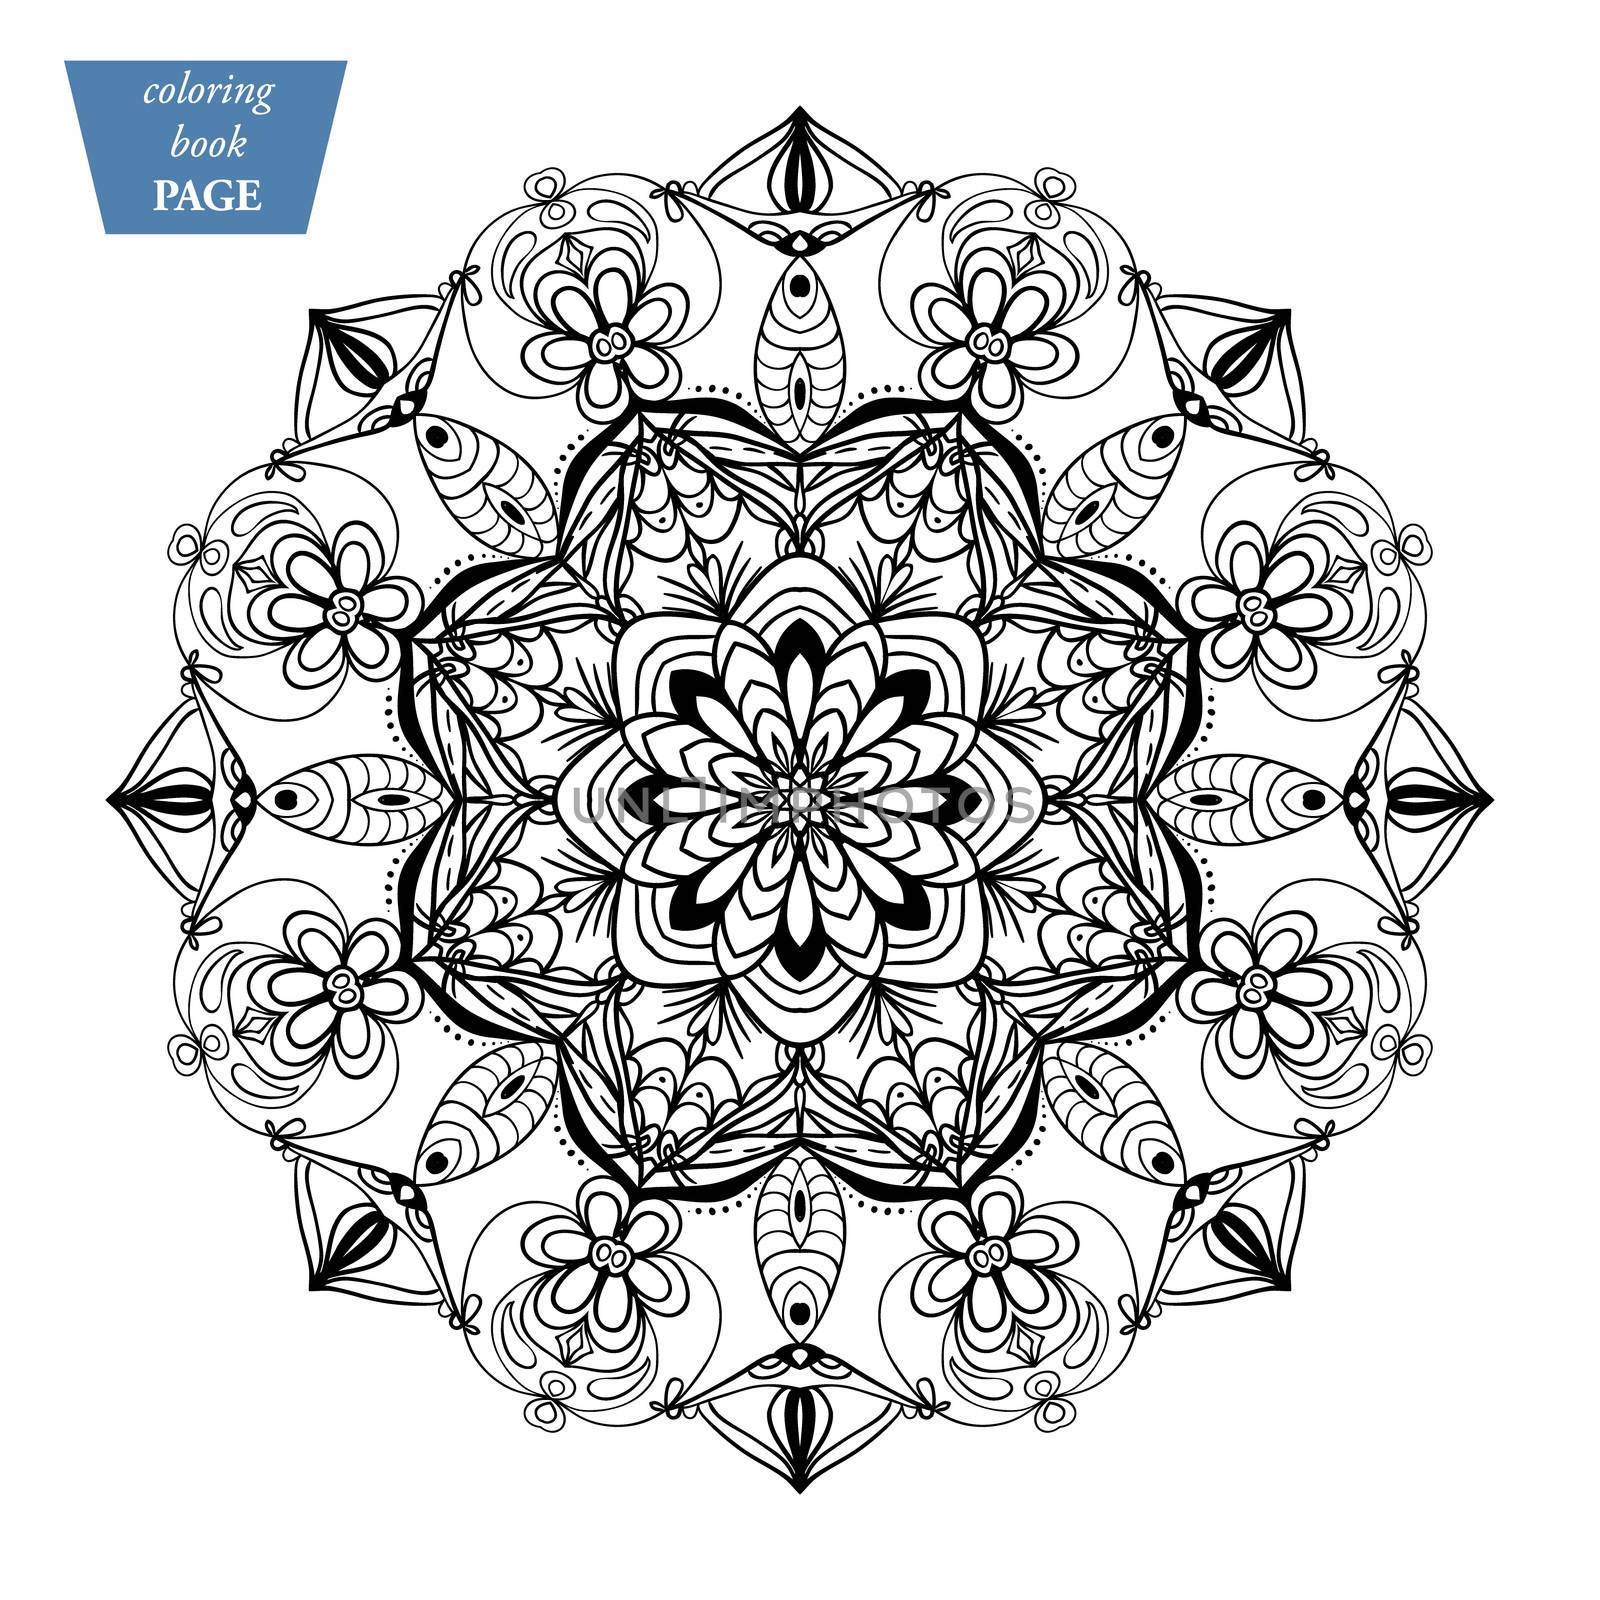 Mandala. Coloring page. Vintage decorative elements. Oriental pattern, vector illustration.g by VeekSegal